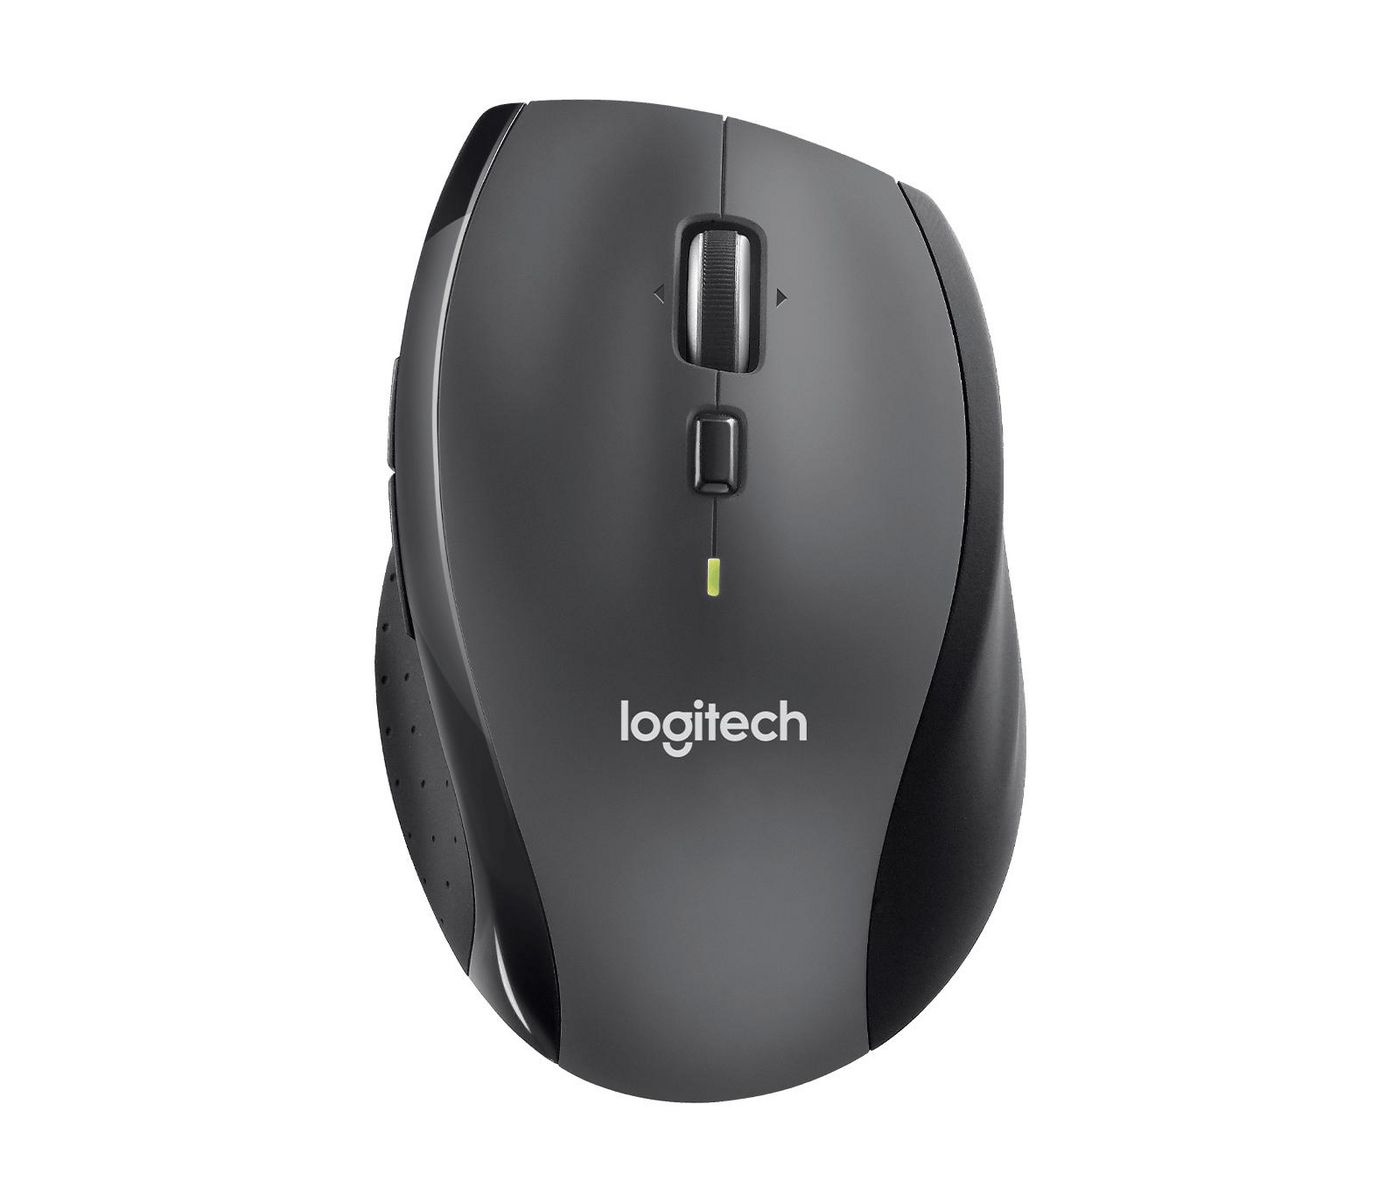 Logitech 910-001950 M705 Mouse, Wireless 